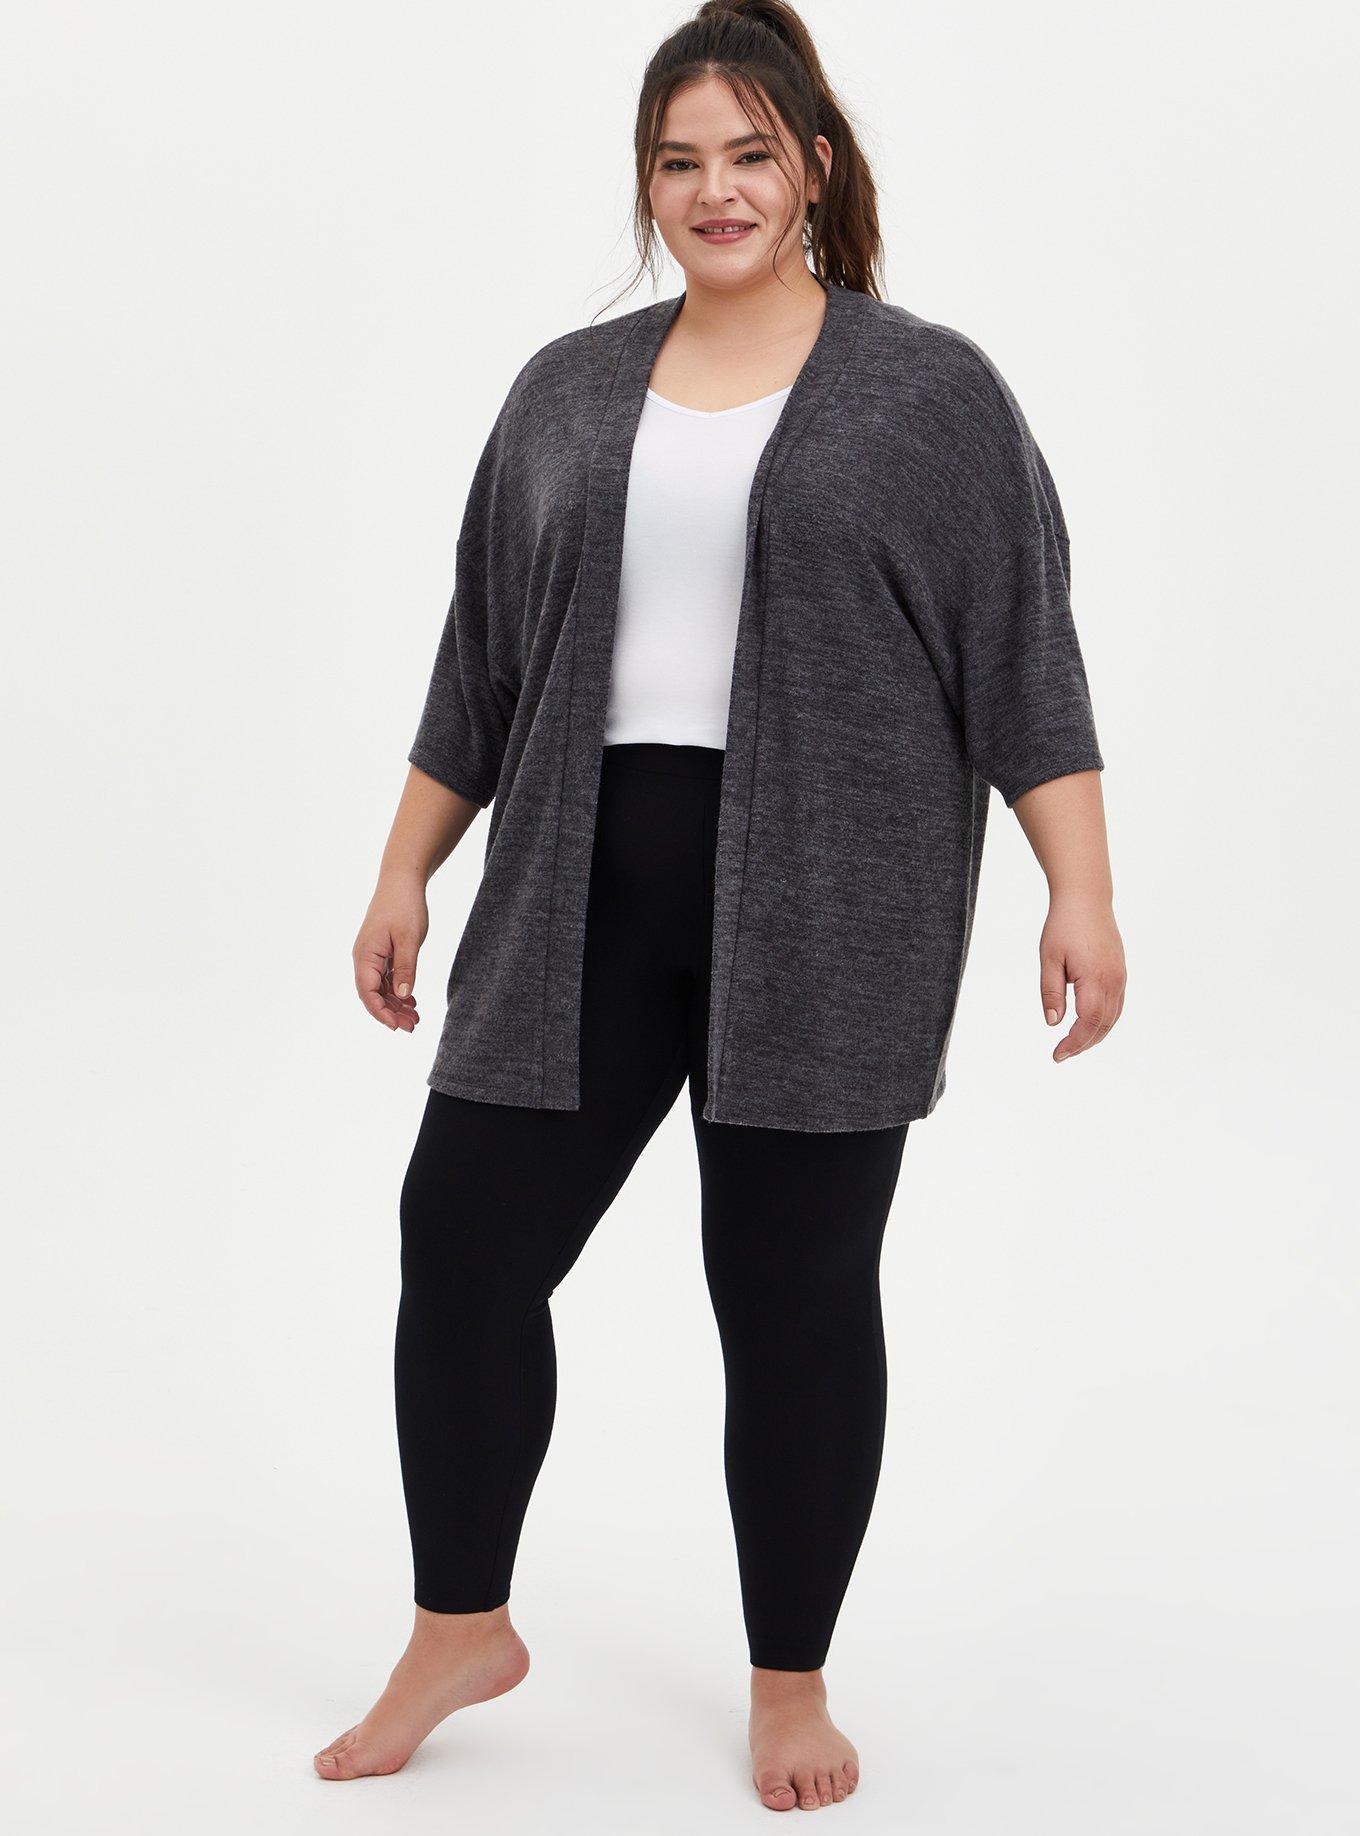 Torrid 2X Leggings Sweater Knit Jacquard Green Plaid Plus Size Mid